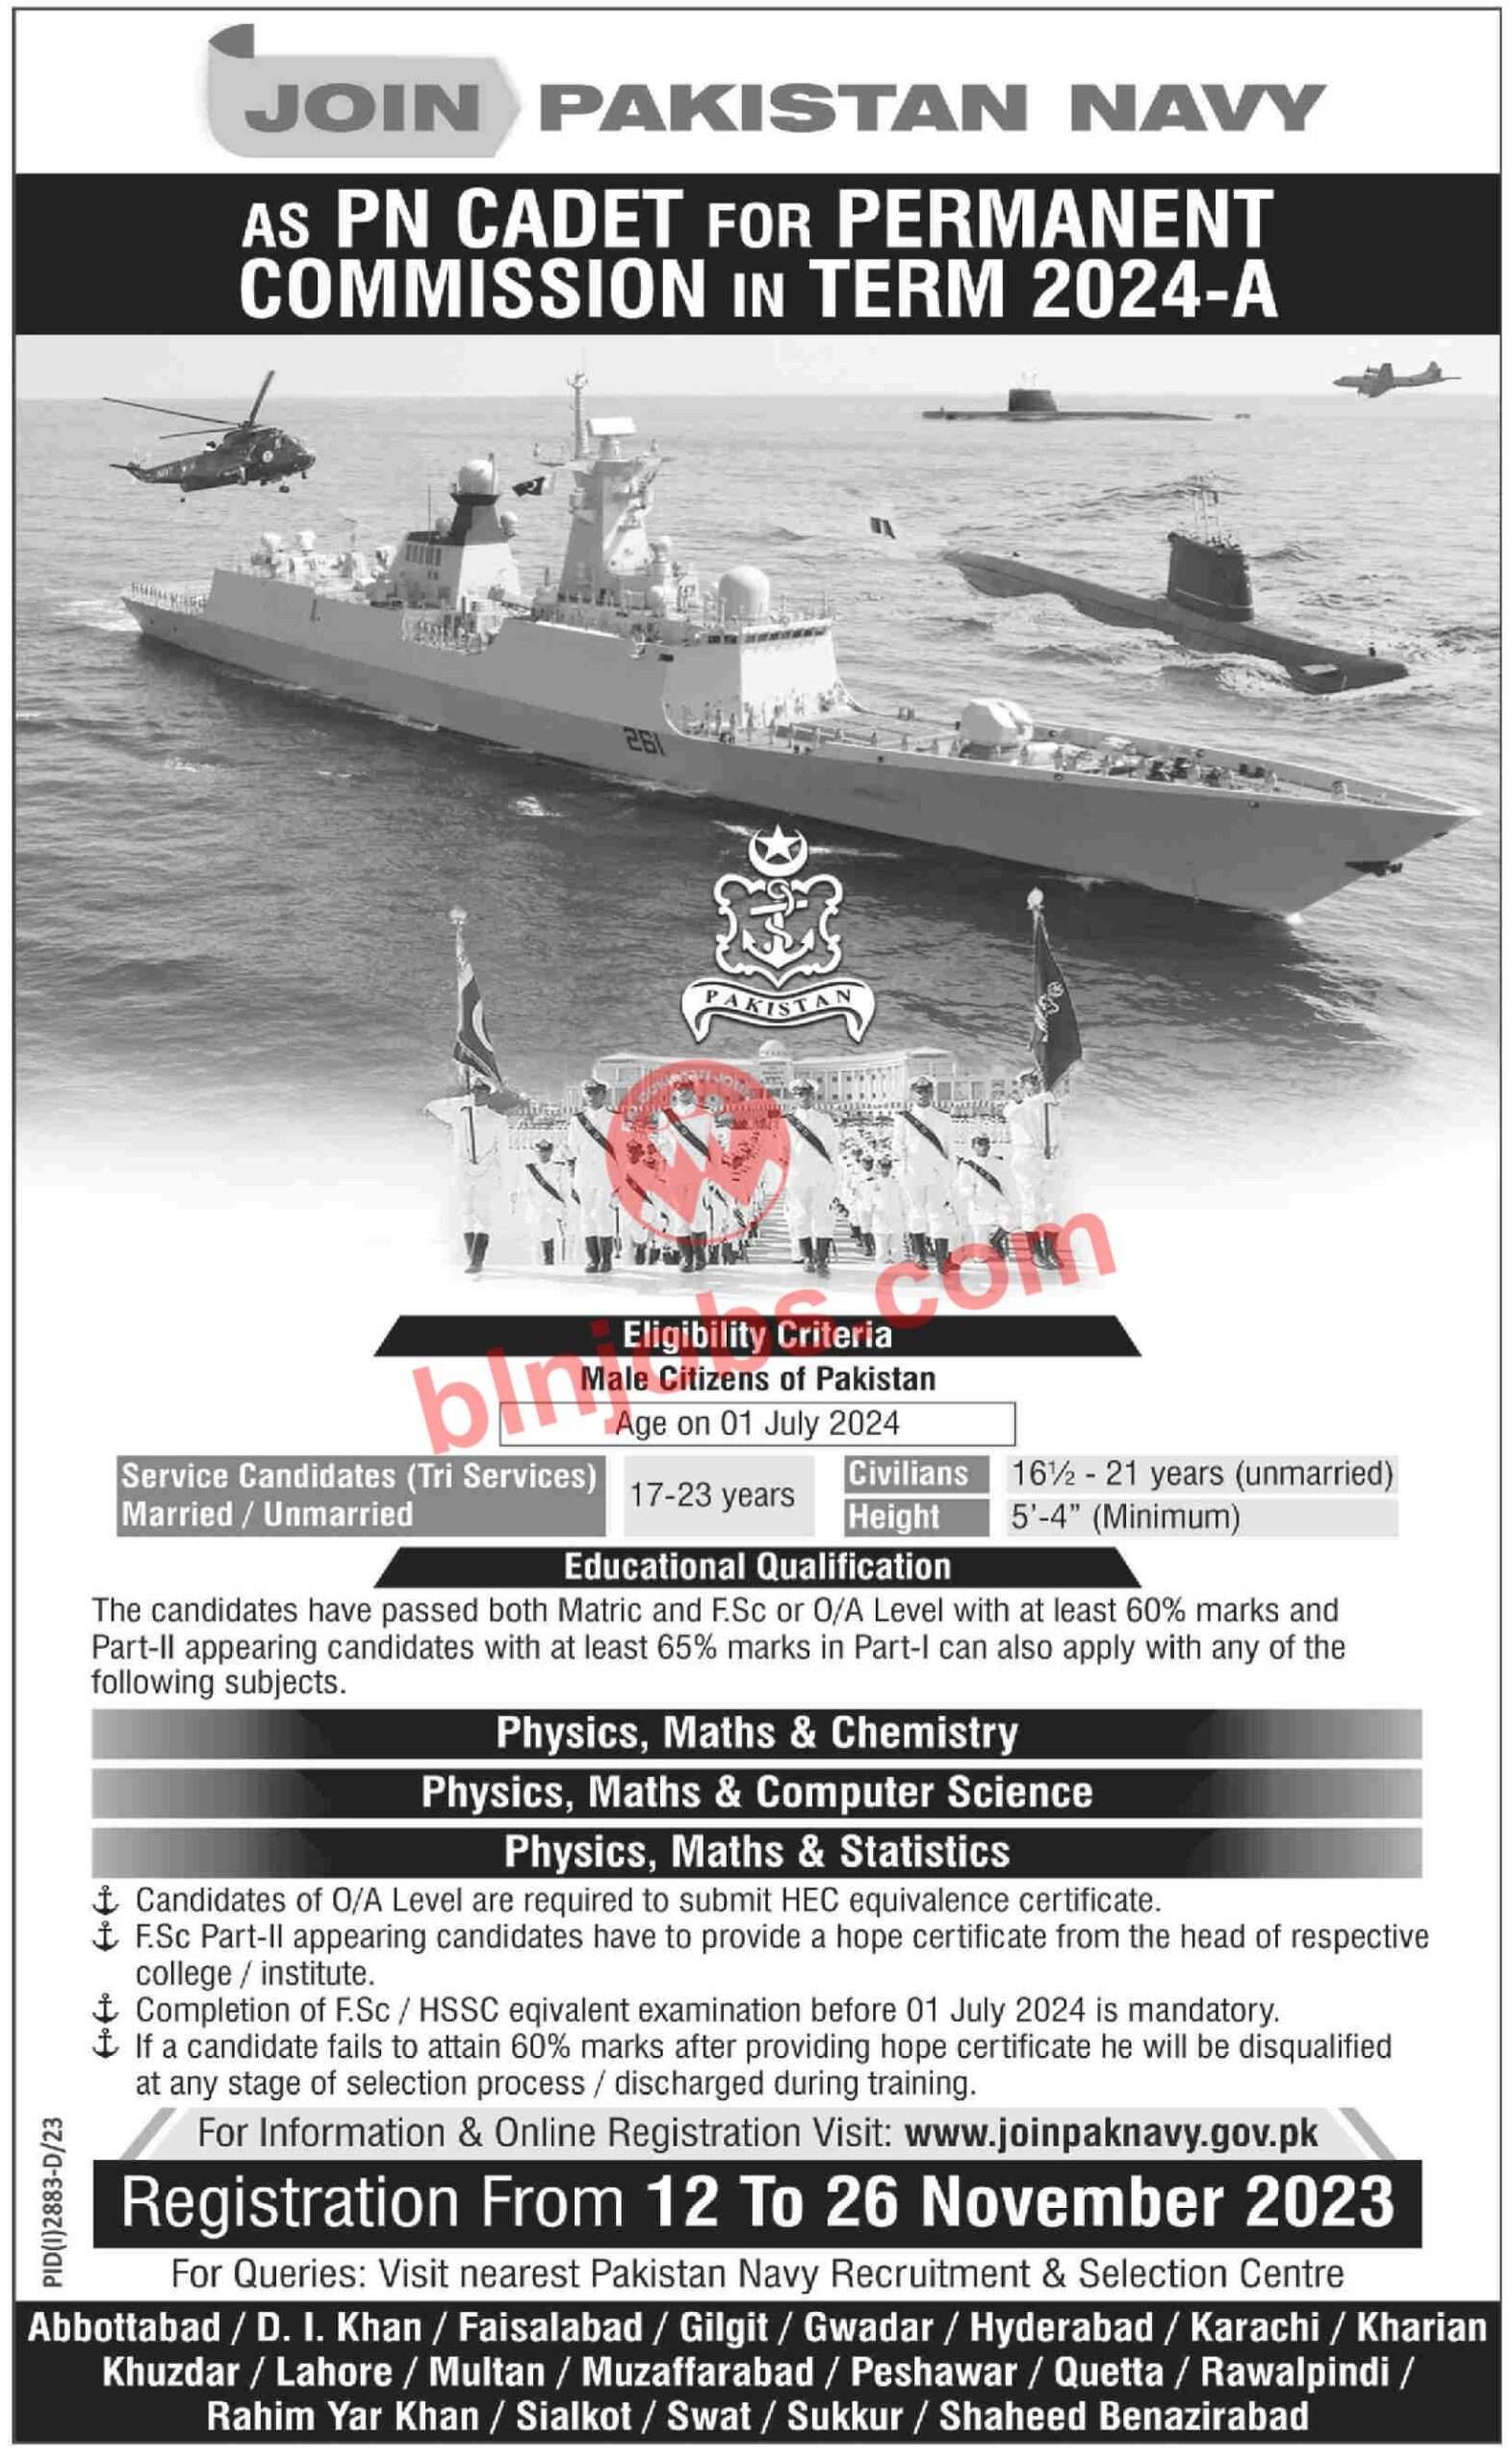 Pakistan Navy Jobs 2023 as PN Cadet